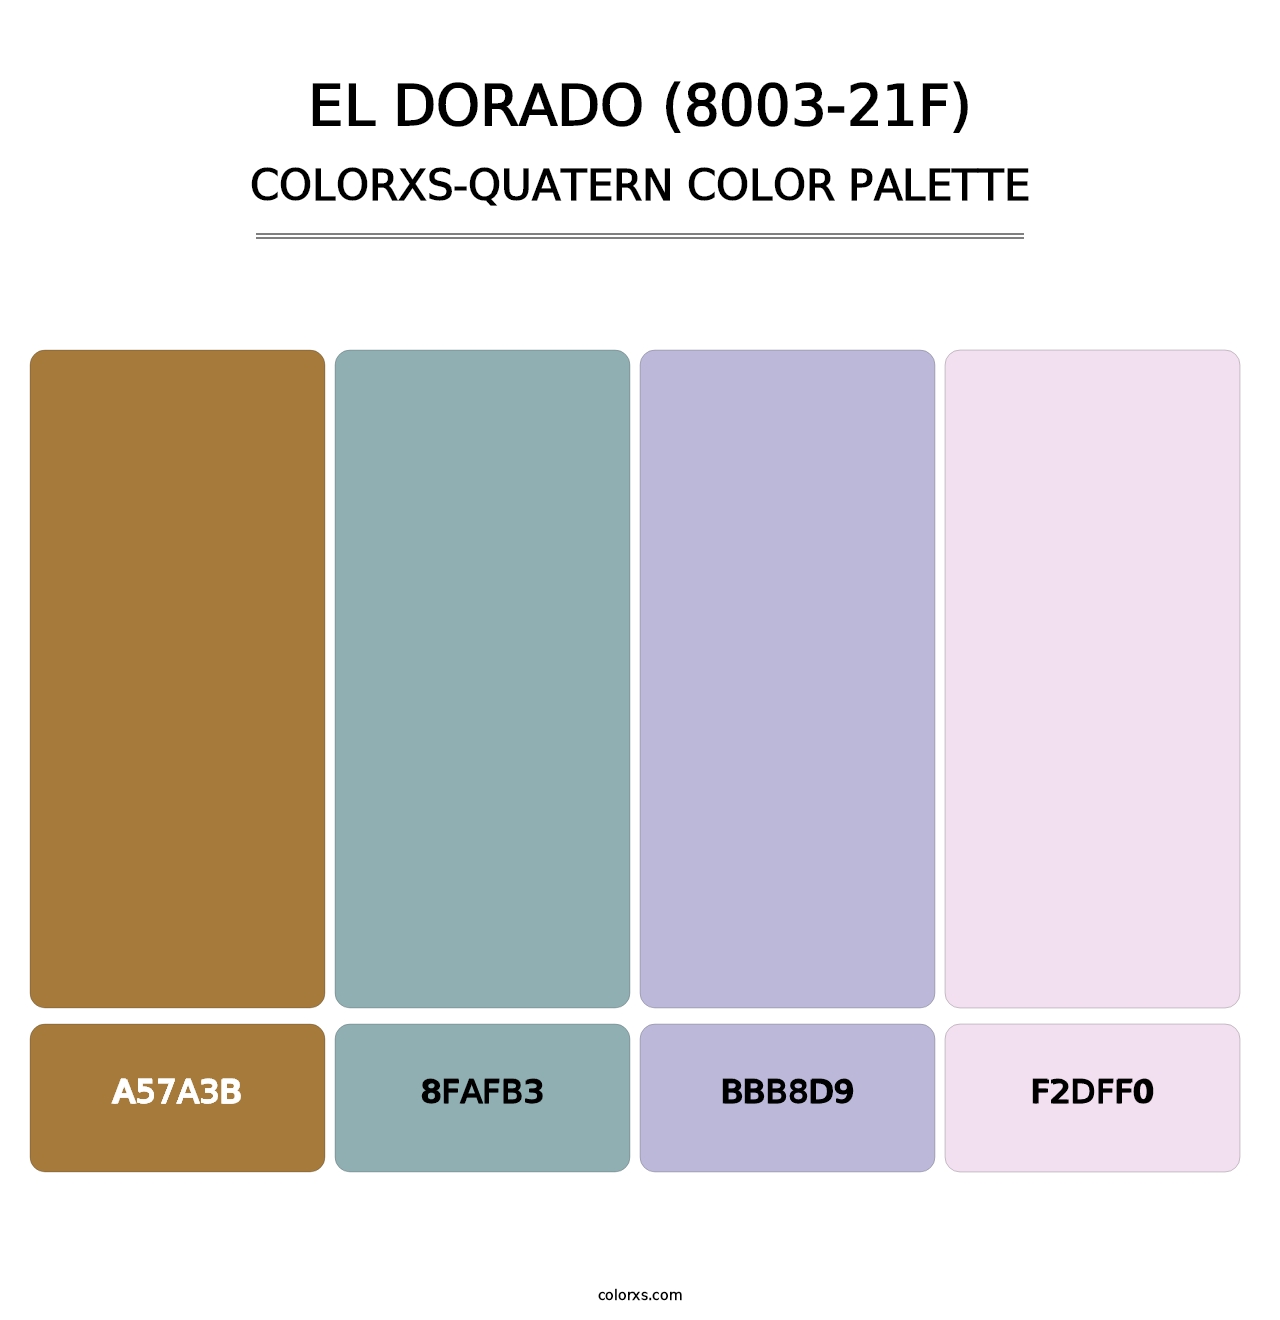 El Dorado (8003-21F) - Colorxs Quatern Palette